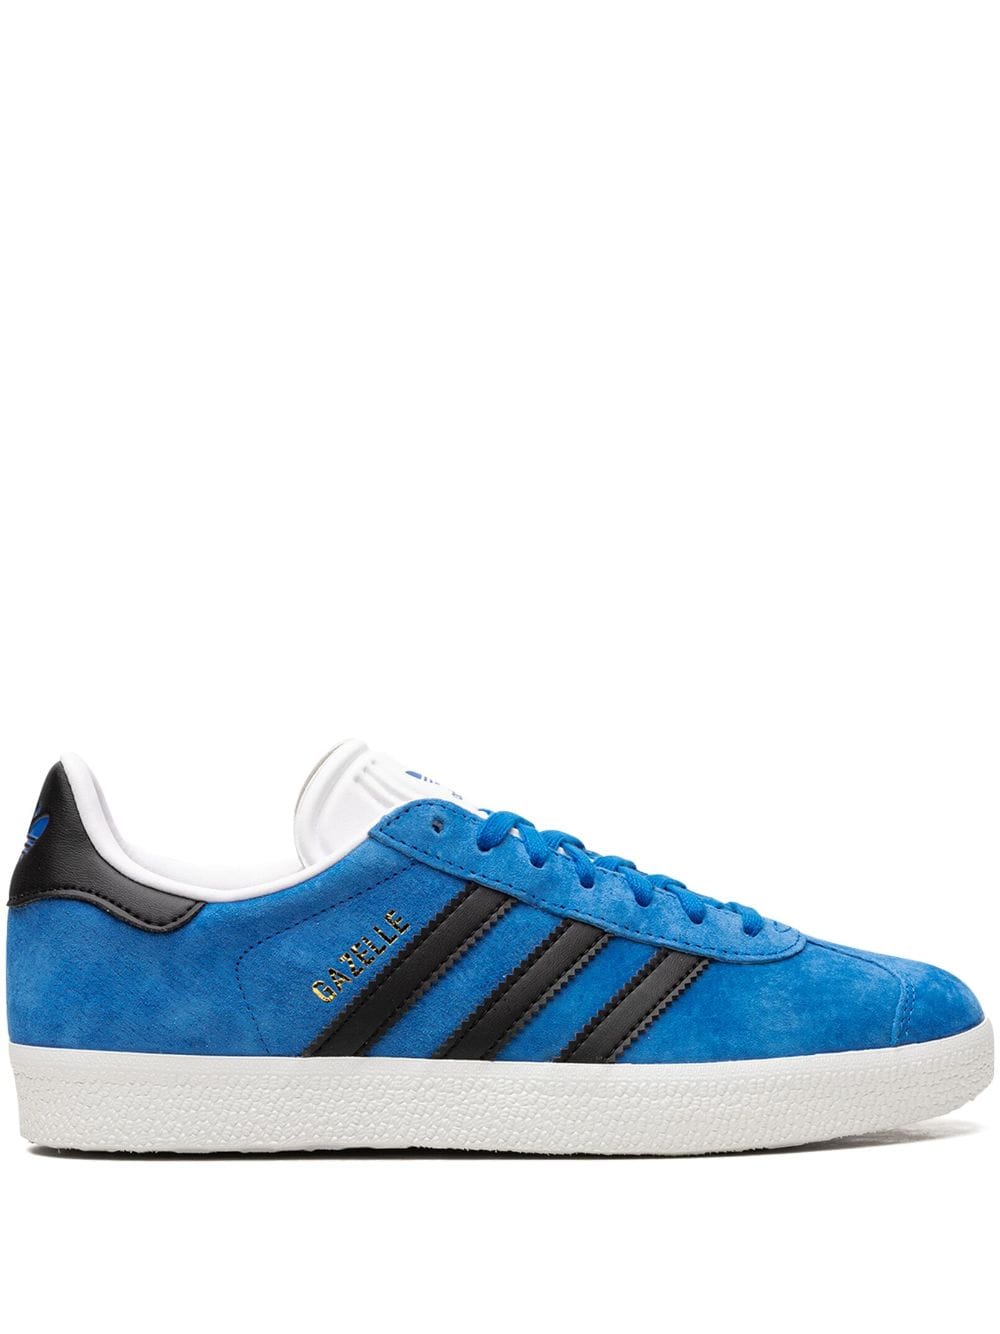 Adidas Originals Gazelle "blue Bird" Sneakers